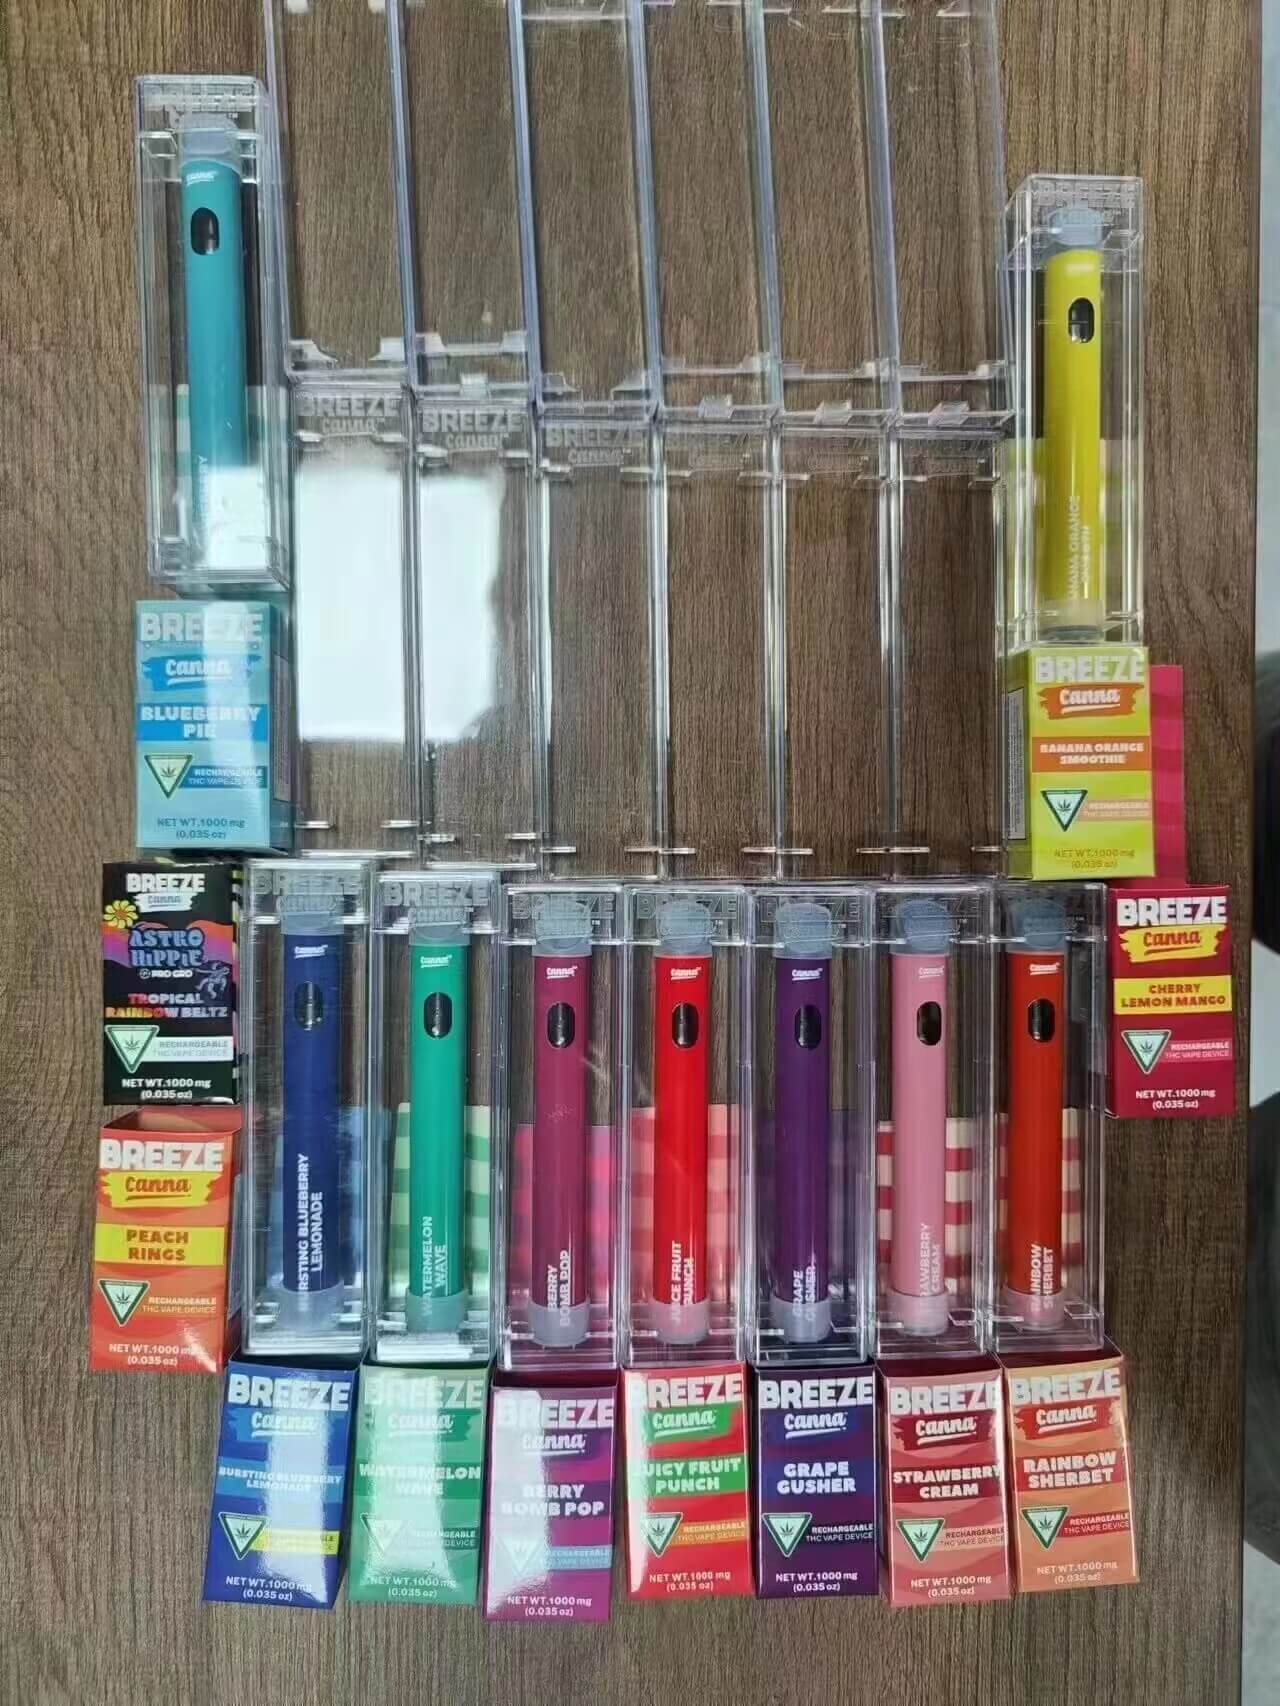 Breeze Canna THC Disposable Vape Pens